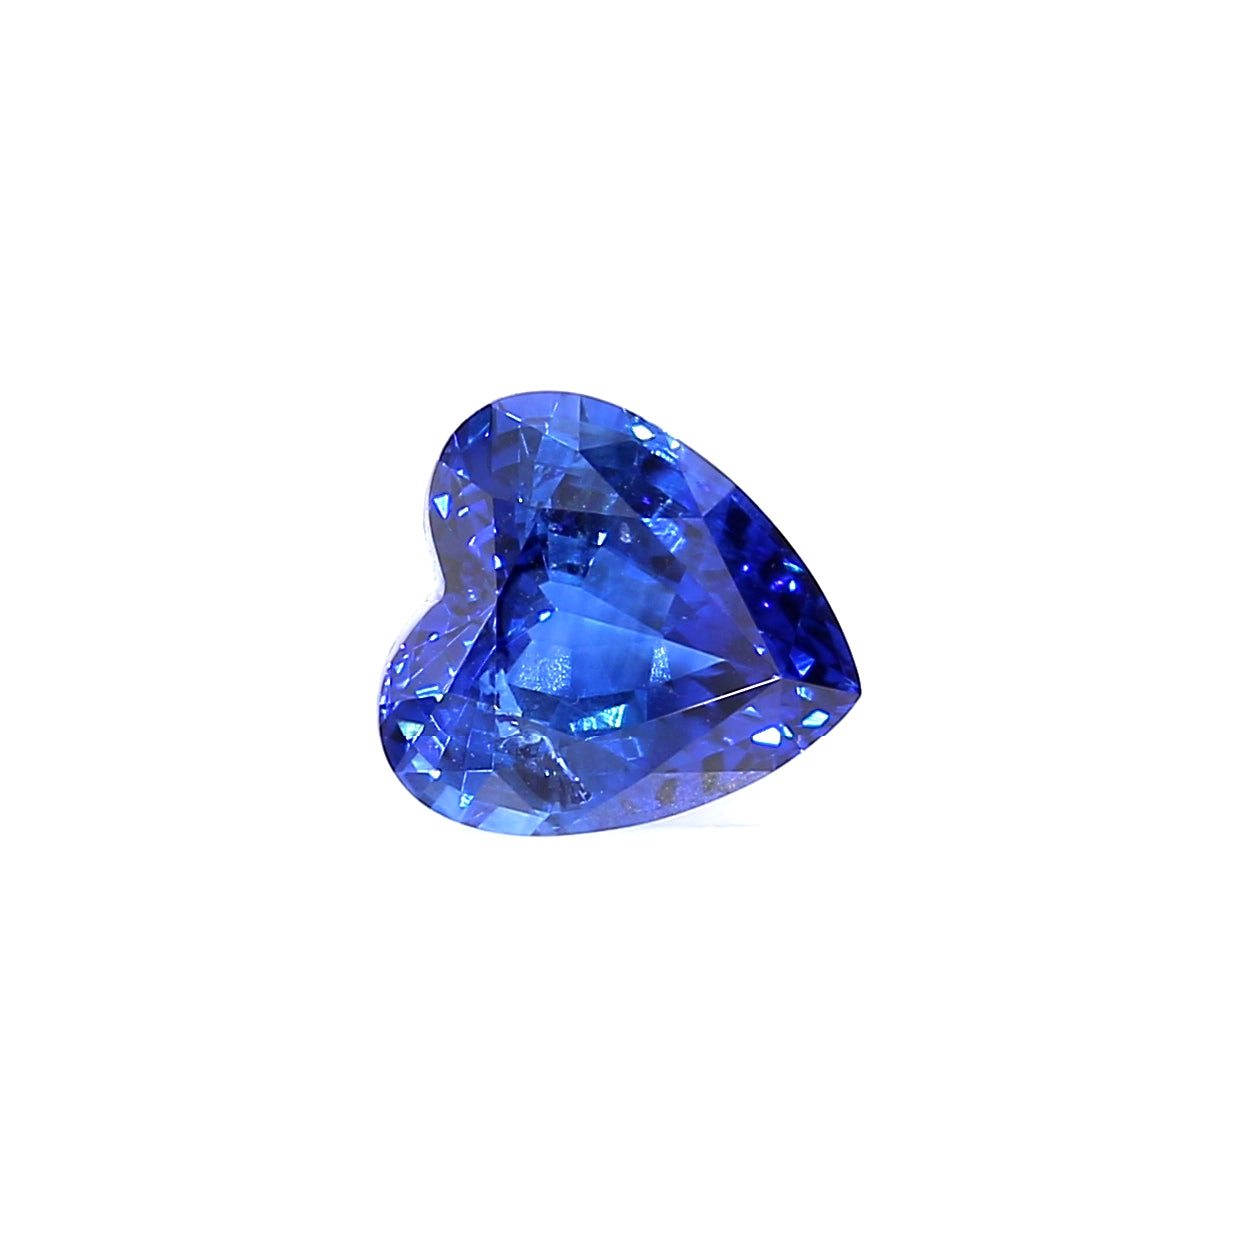 2.44ct Heart Shape Sapphire, Heated, Sri Lanka - 8.19 x 7.77 x 4.73mm